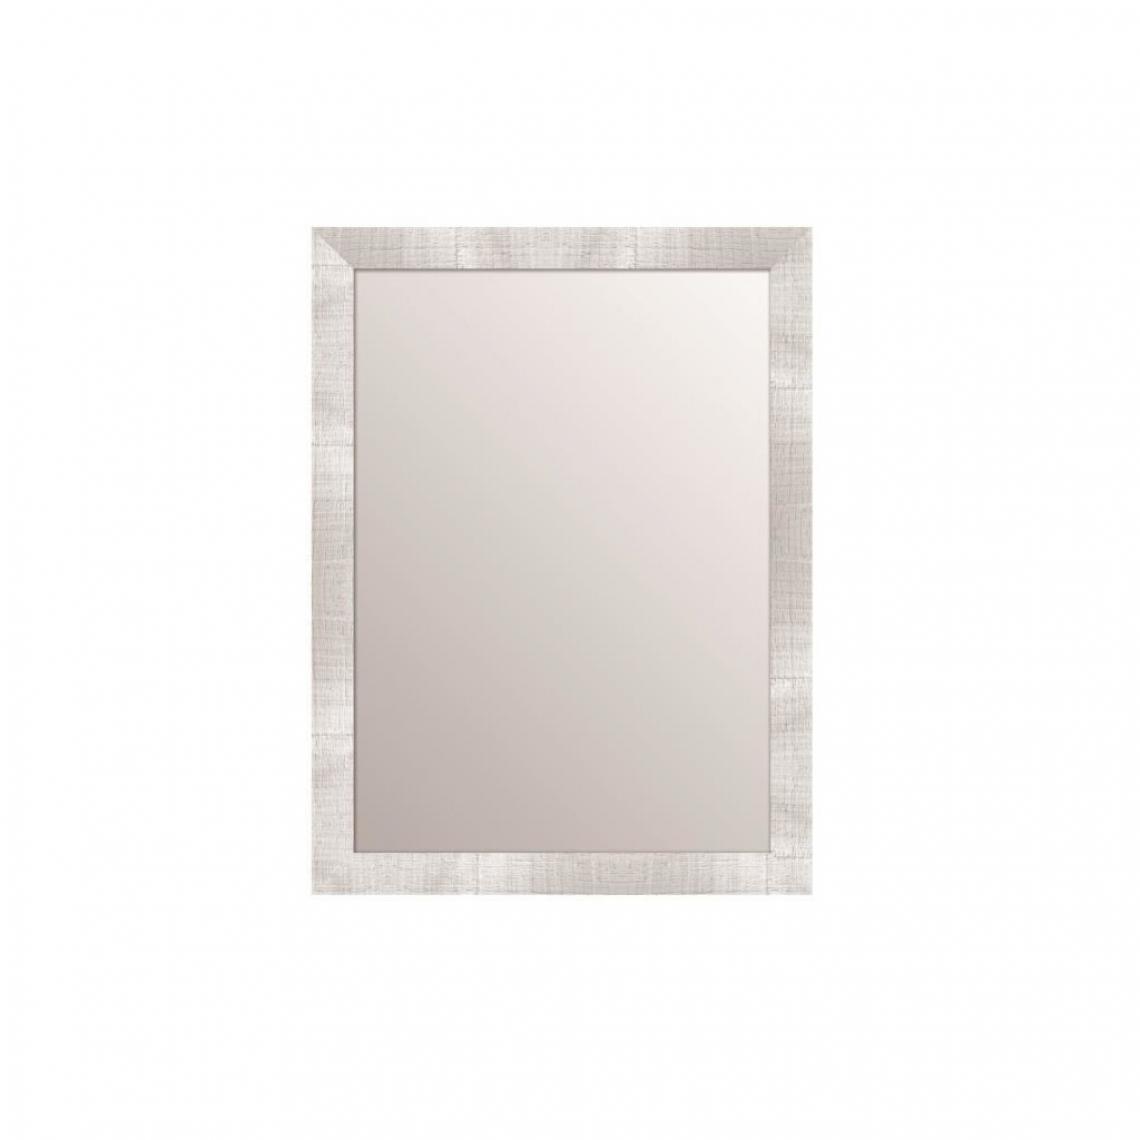 Artesania - TEXA Miroir rectangulaire 50x70 cm Blanc - Miroirs